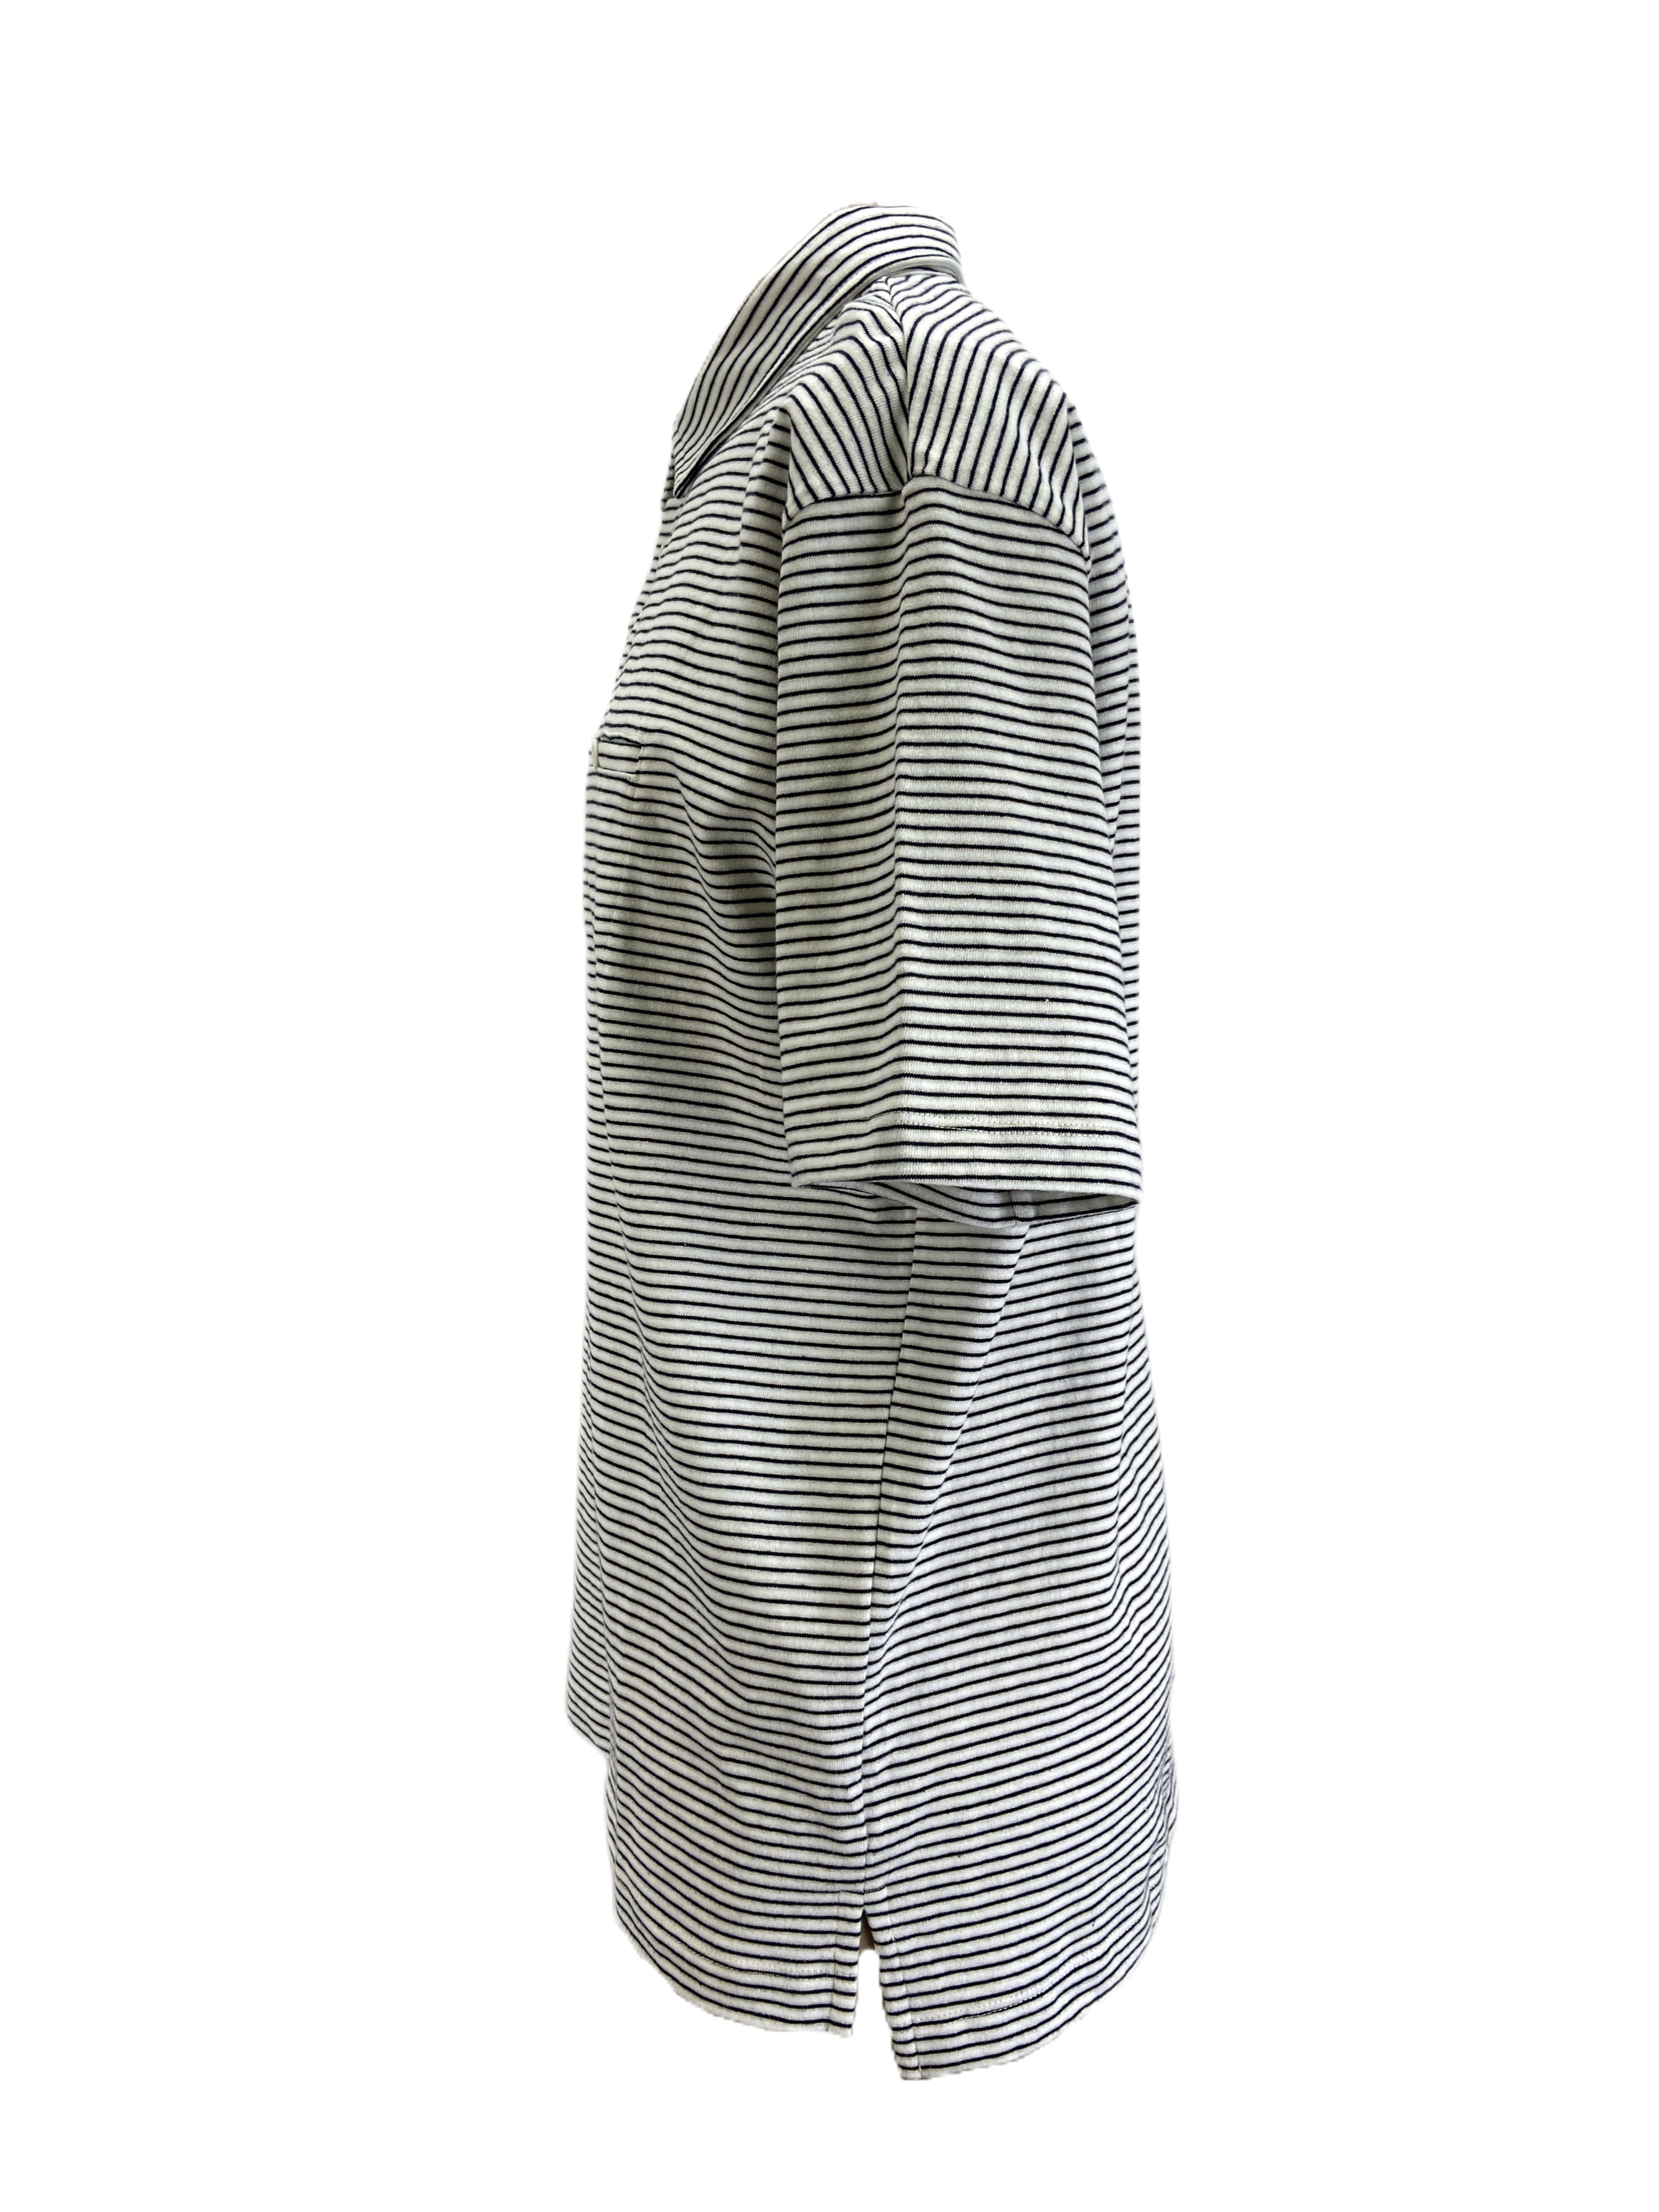 STEVEN ALAN Men's White Placket Short Sleeve Striped Polo NWT